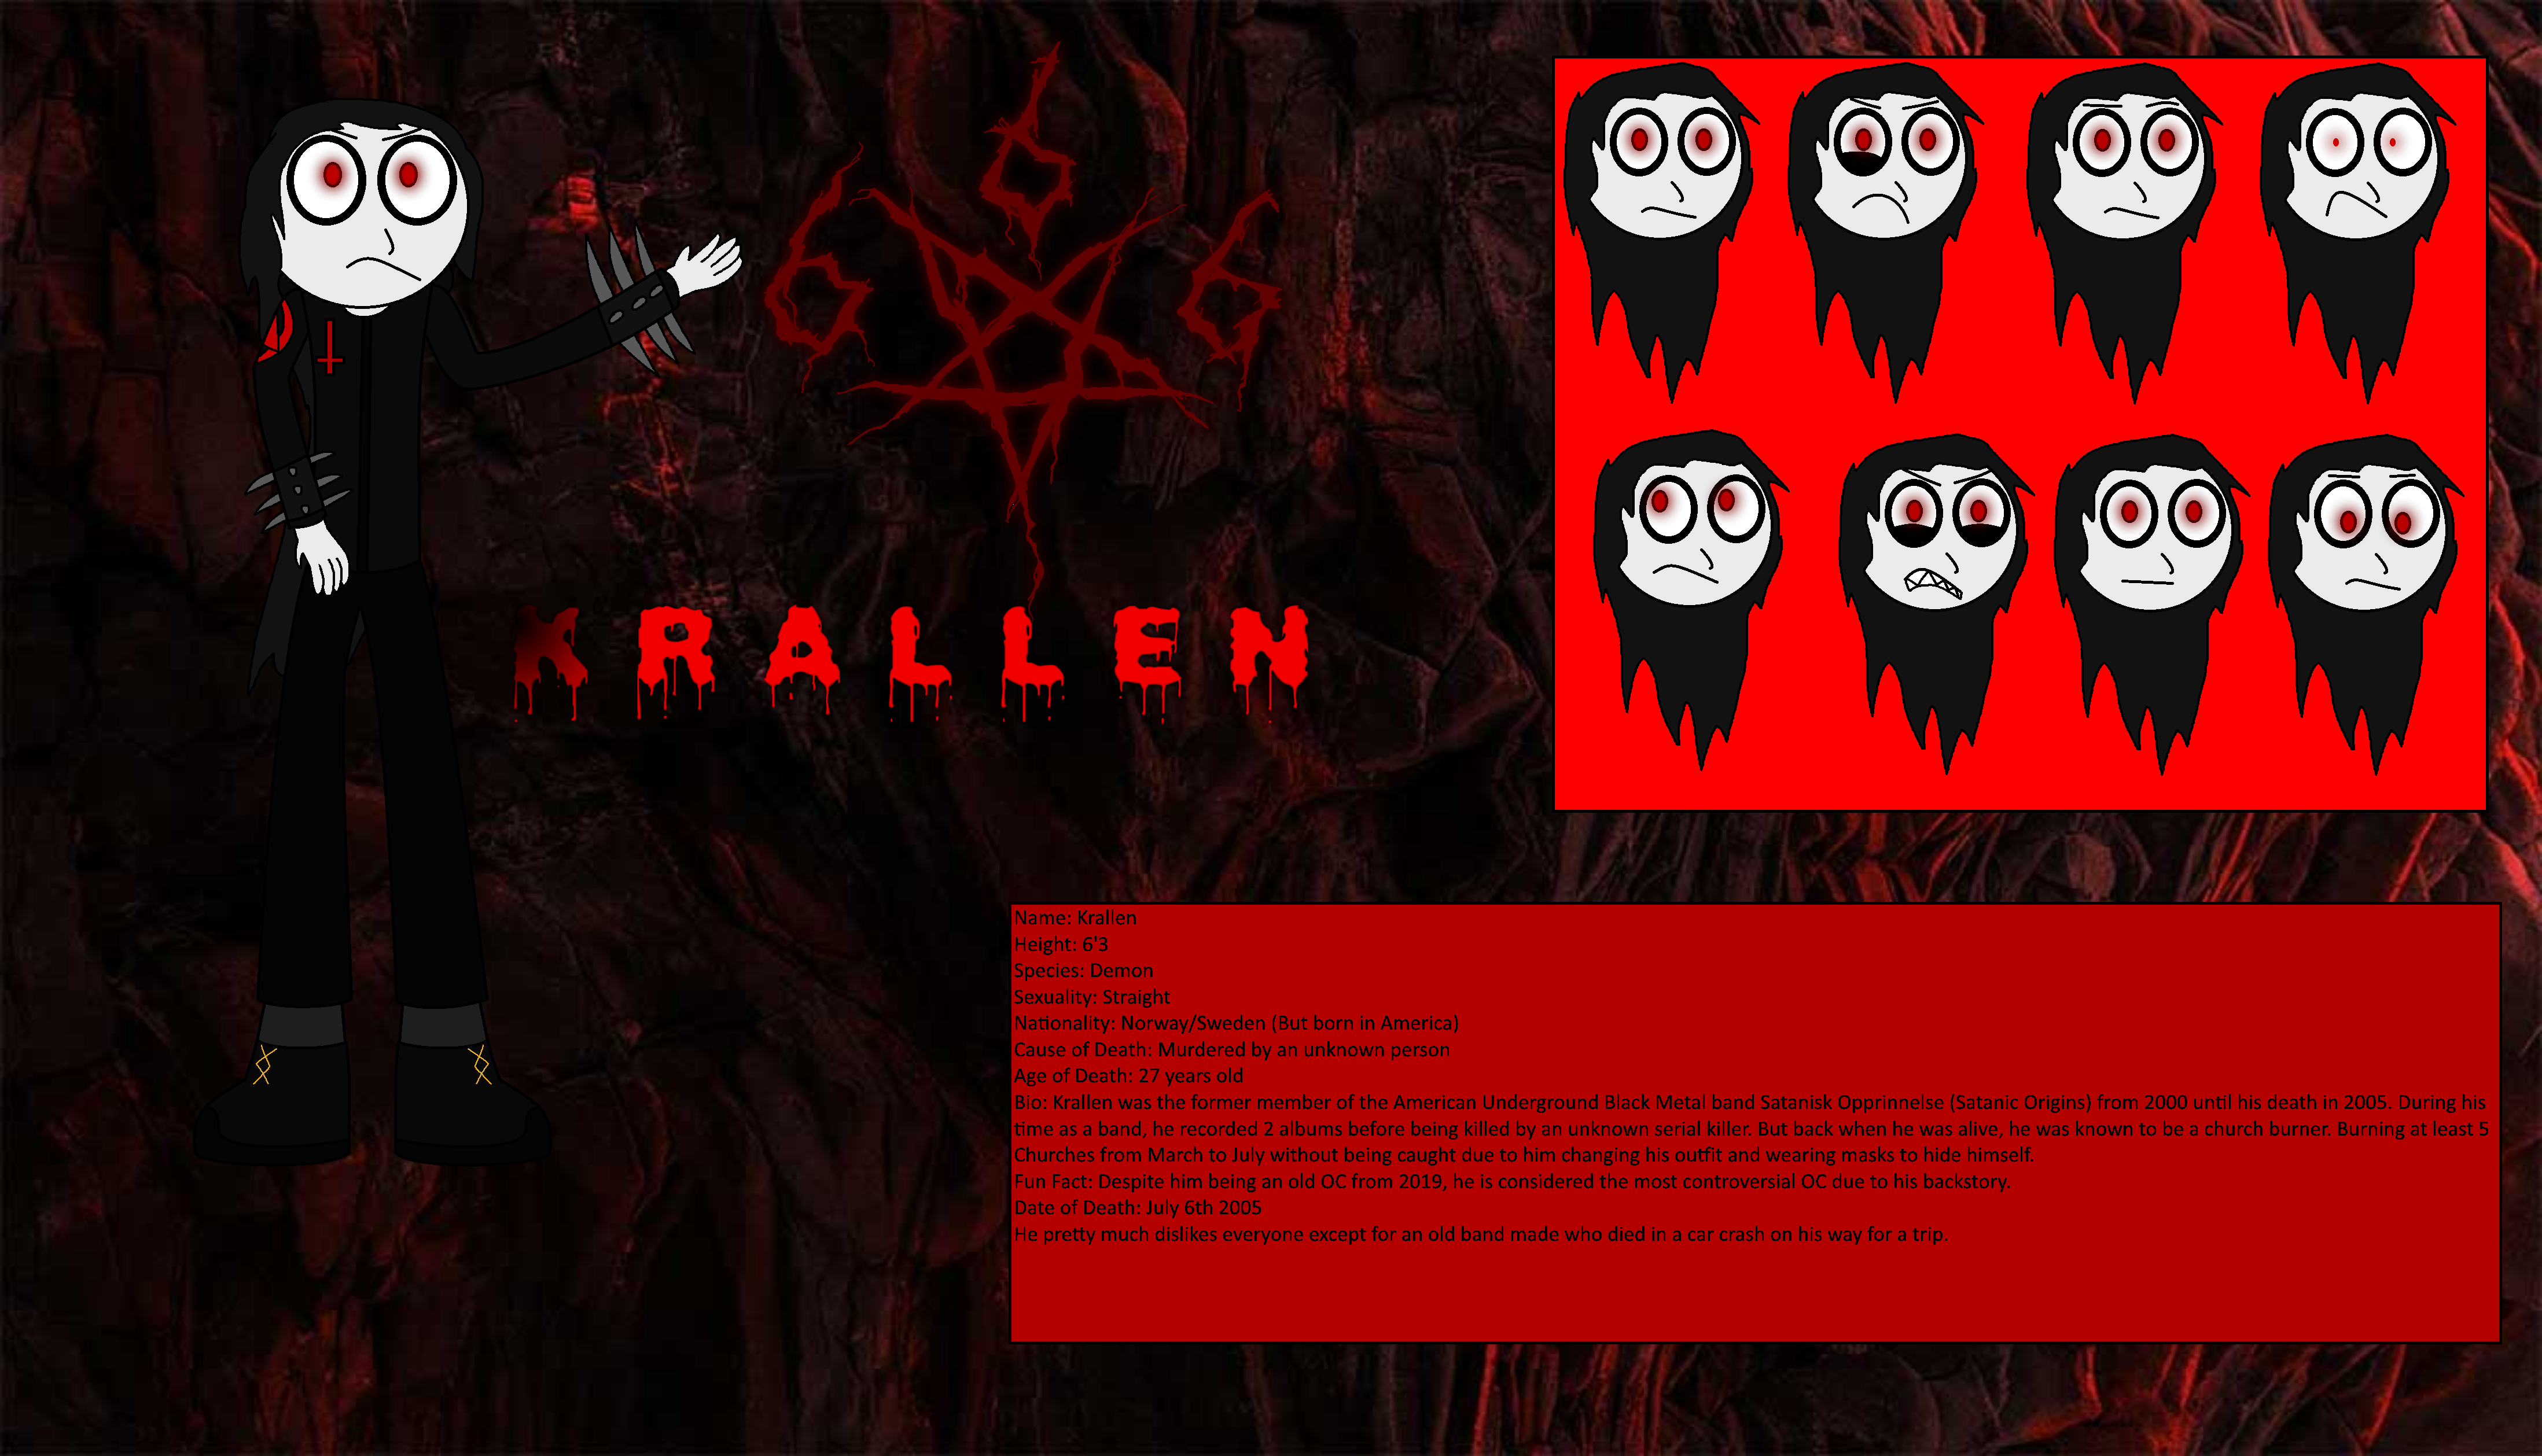 Krallen Bio by CarnoProductions on DeviantArt